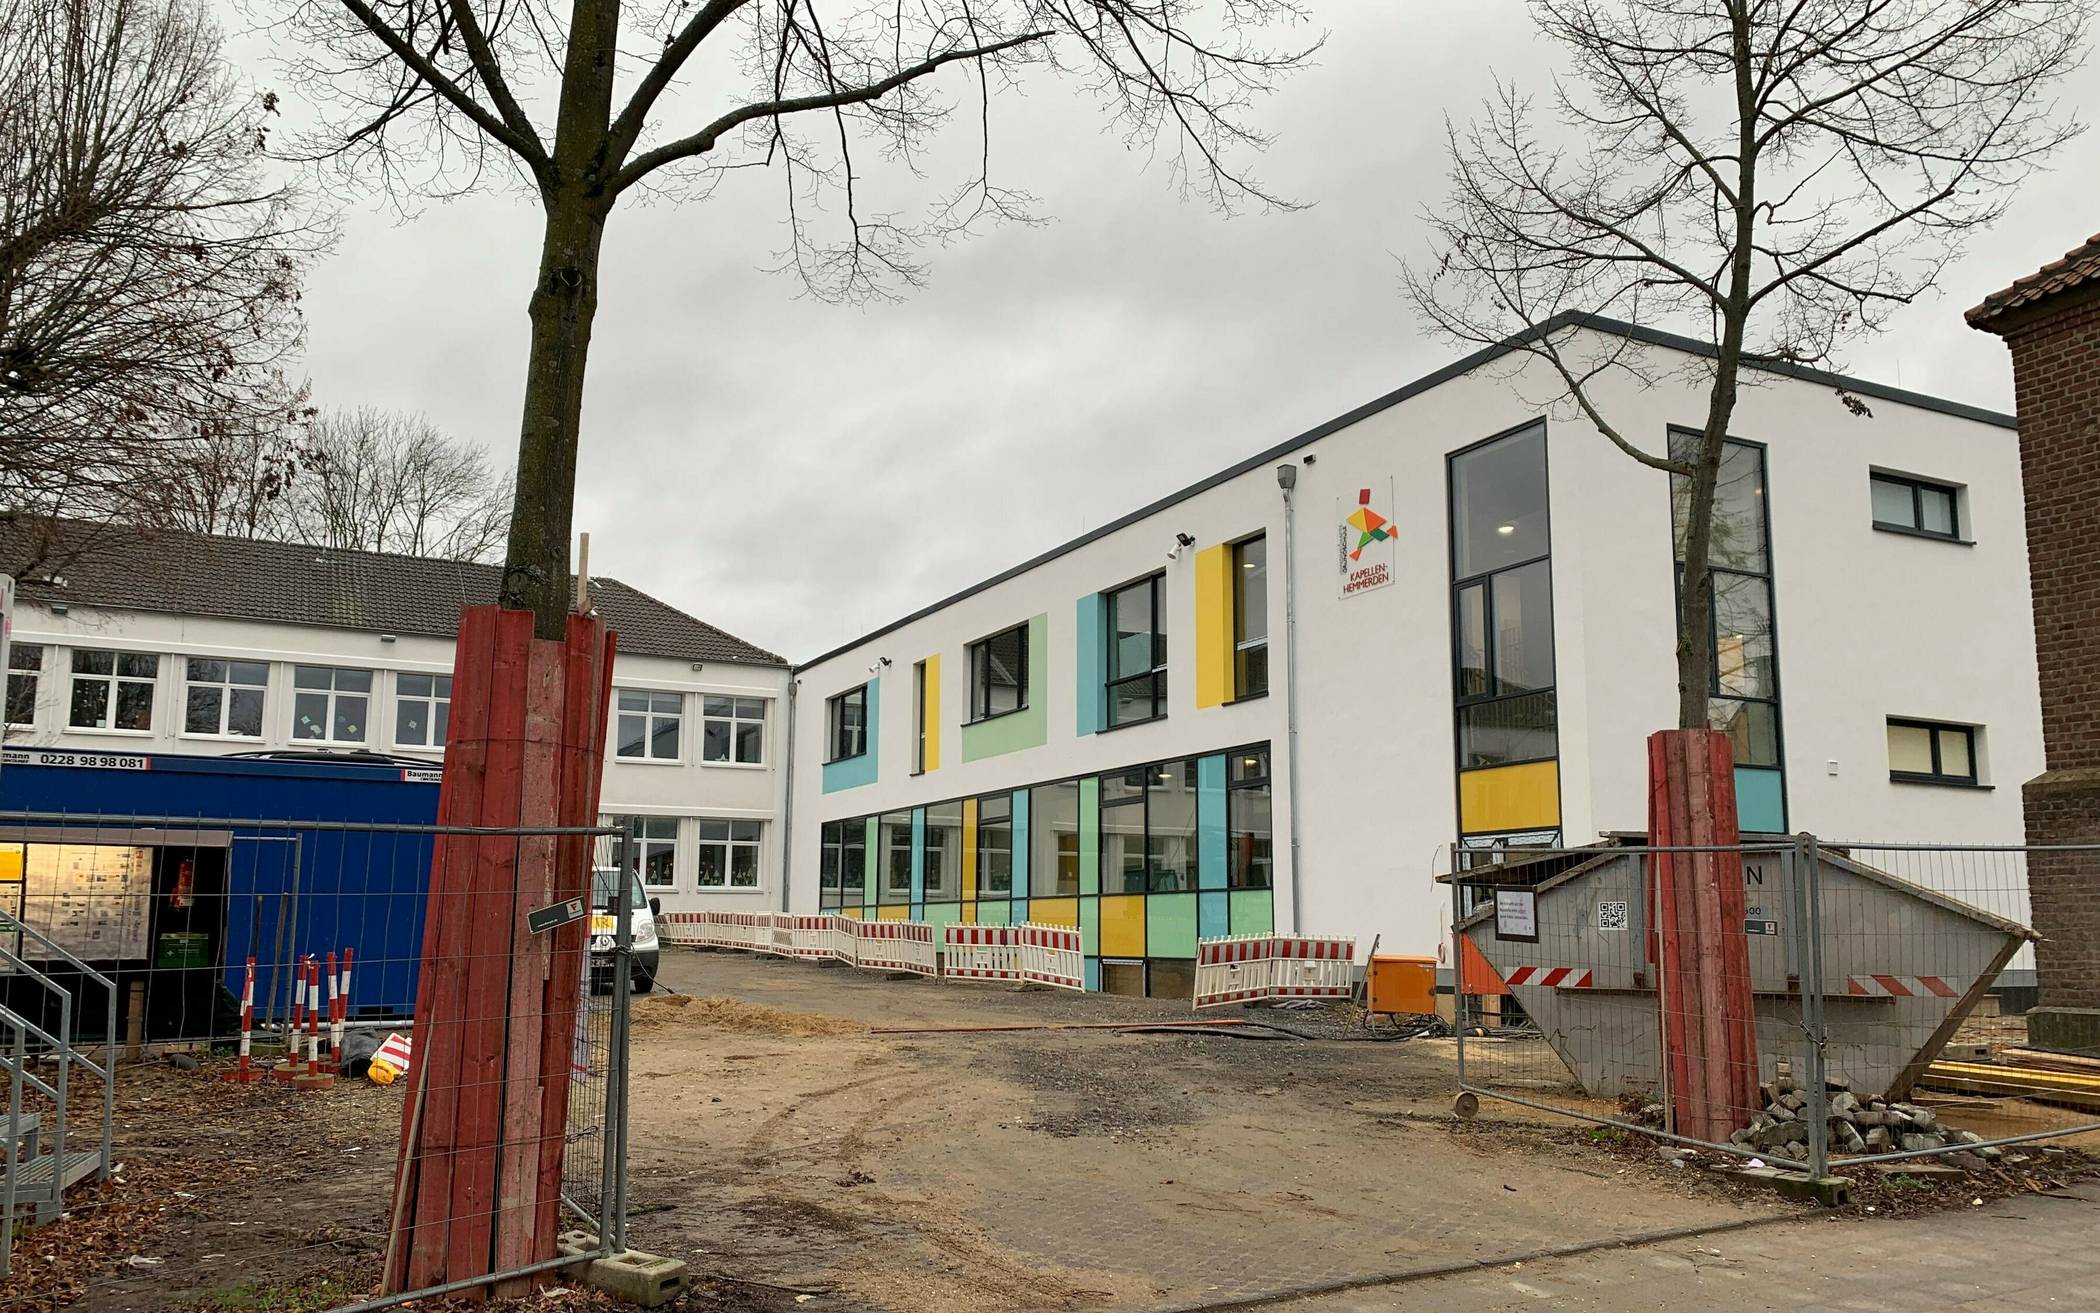  Erweiterung der Grundschule in Kapellen: Schulanbau bald abgeschlossen. 